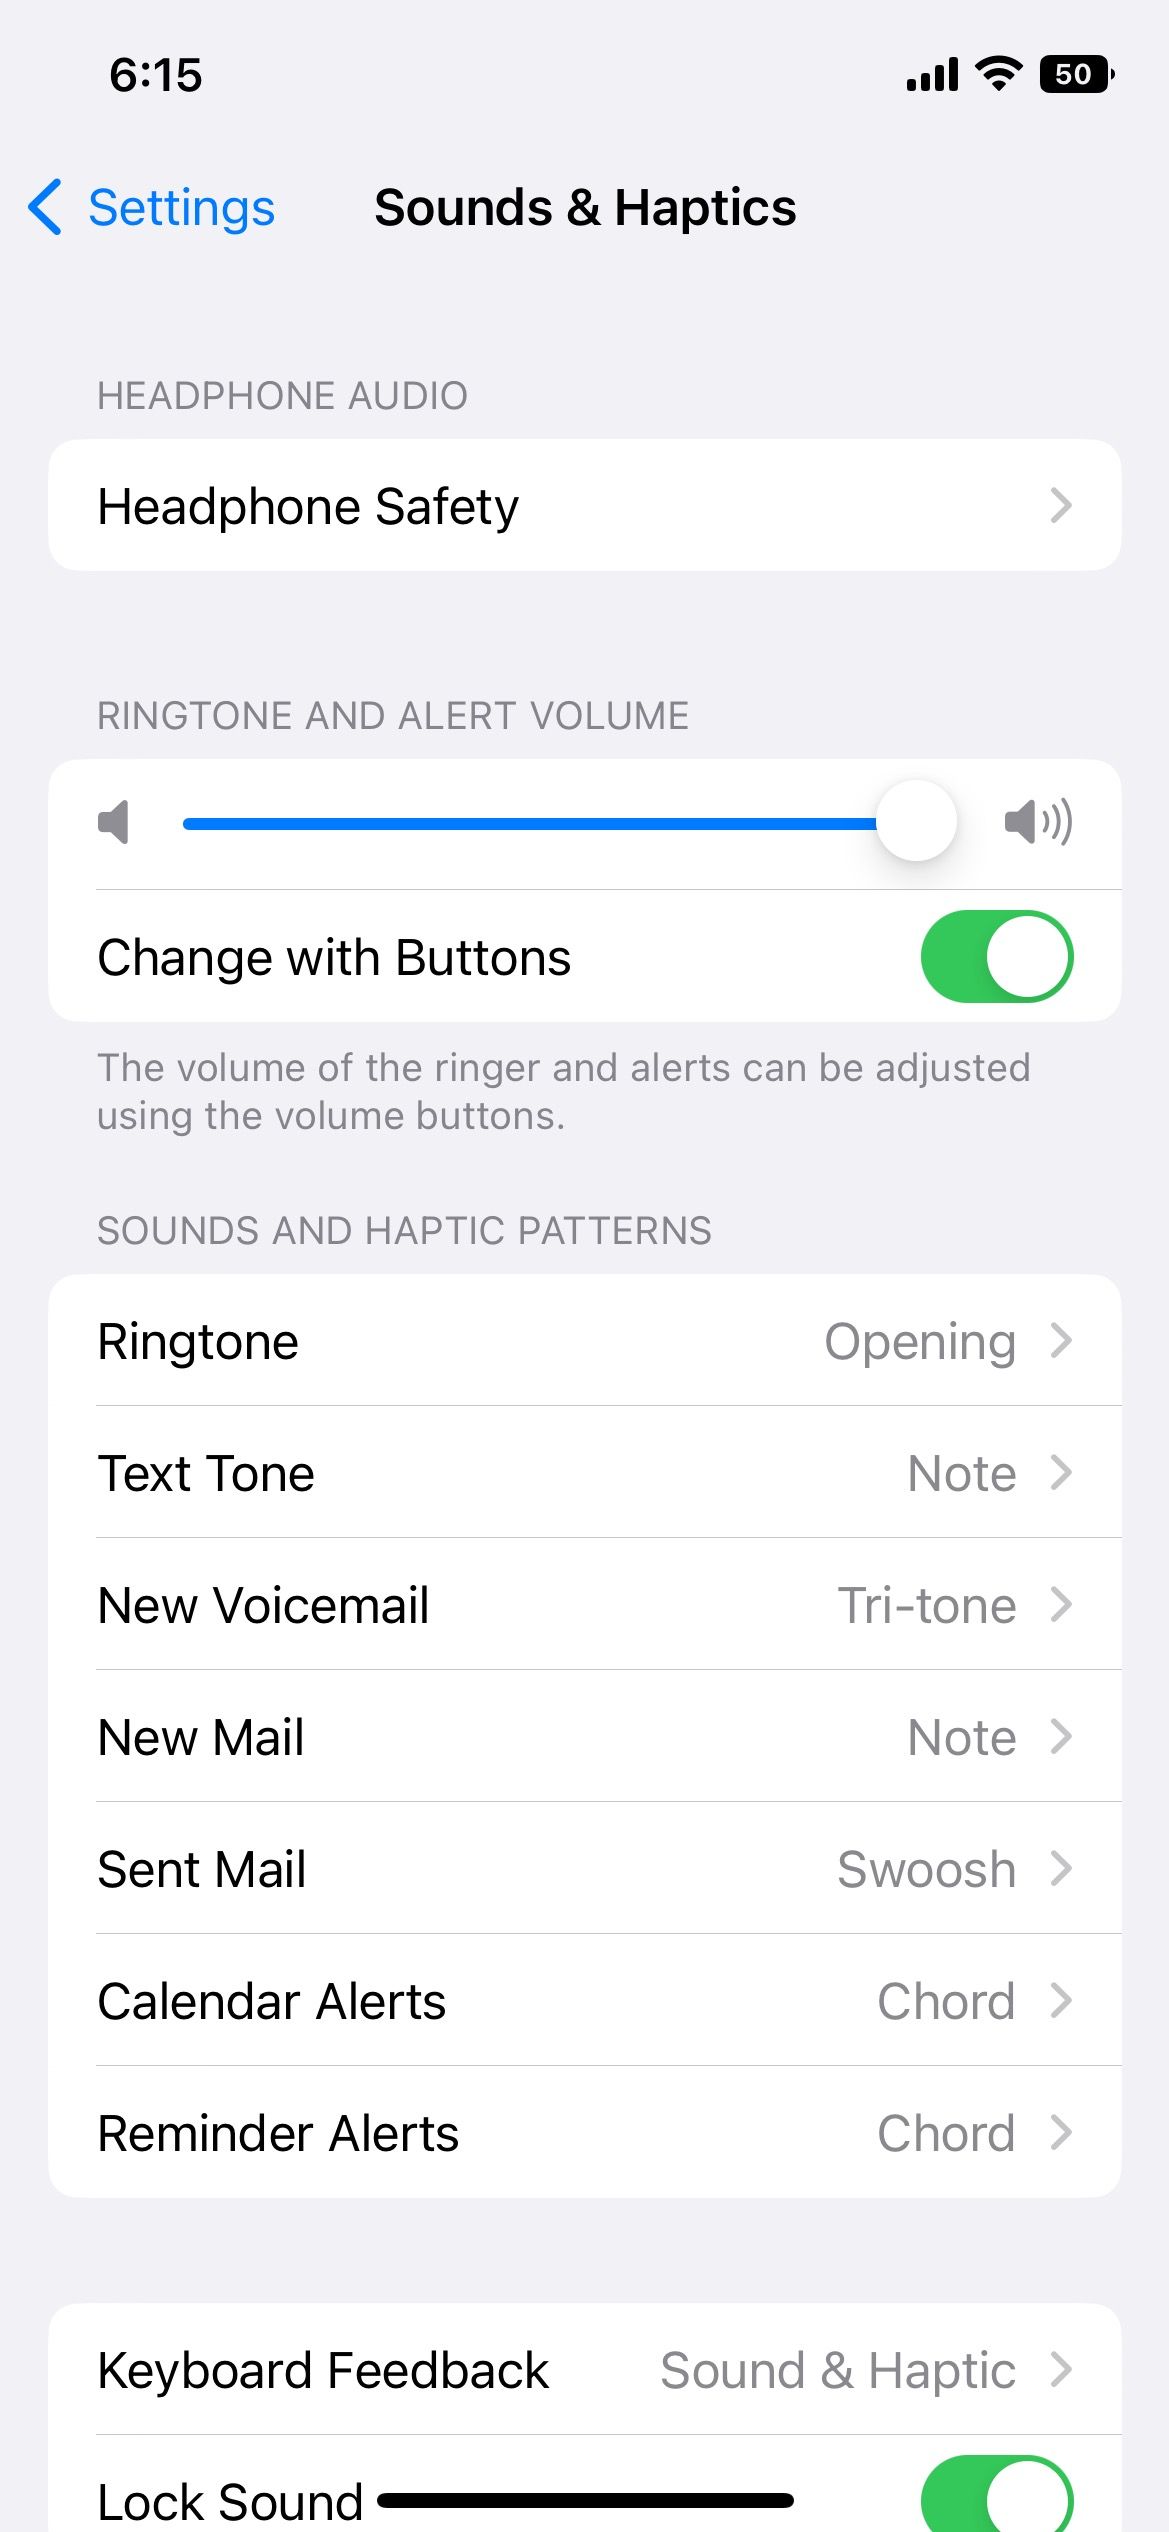 Ringtone and alert volume